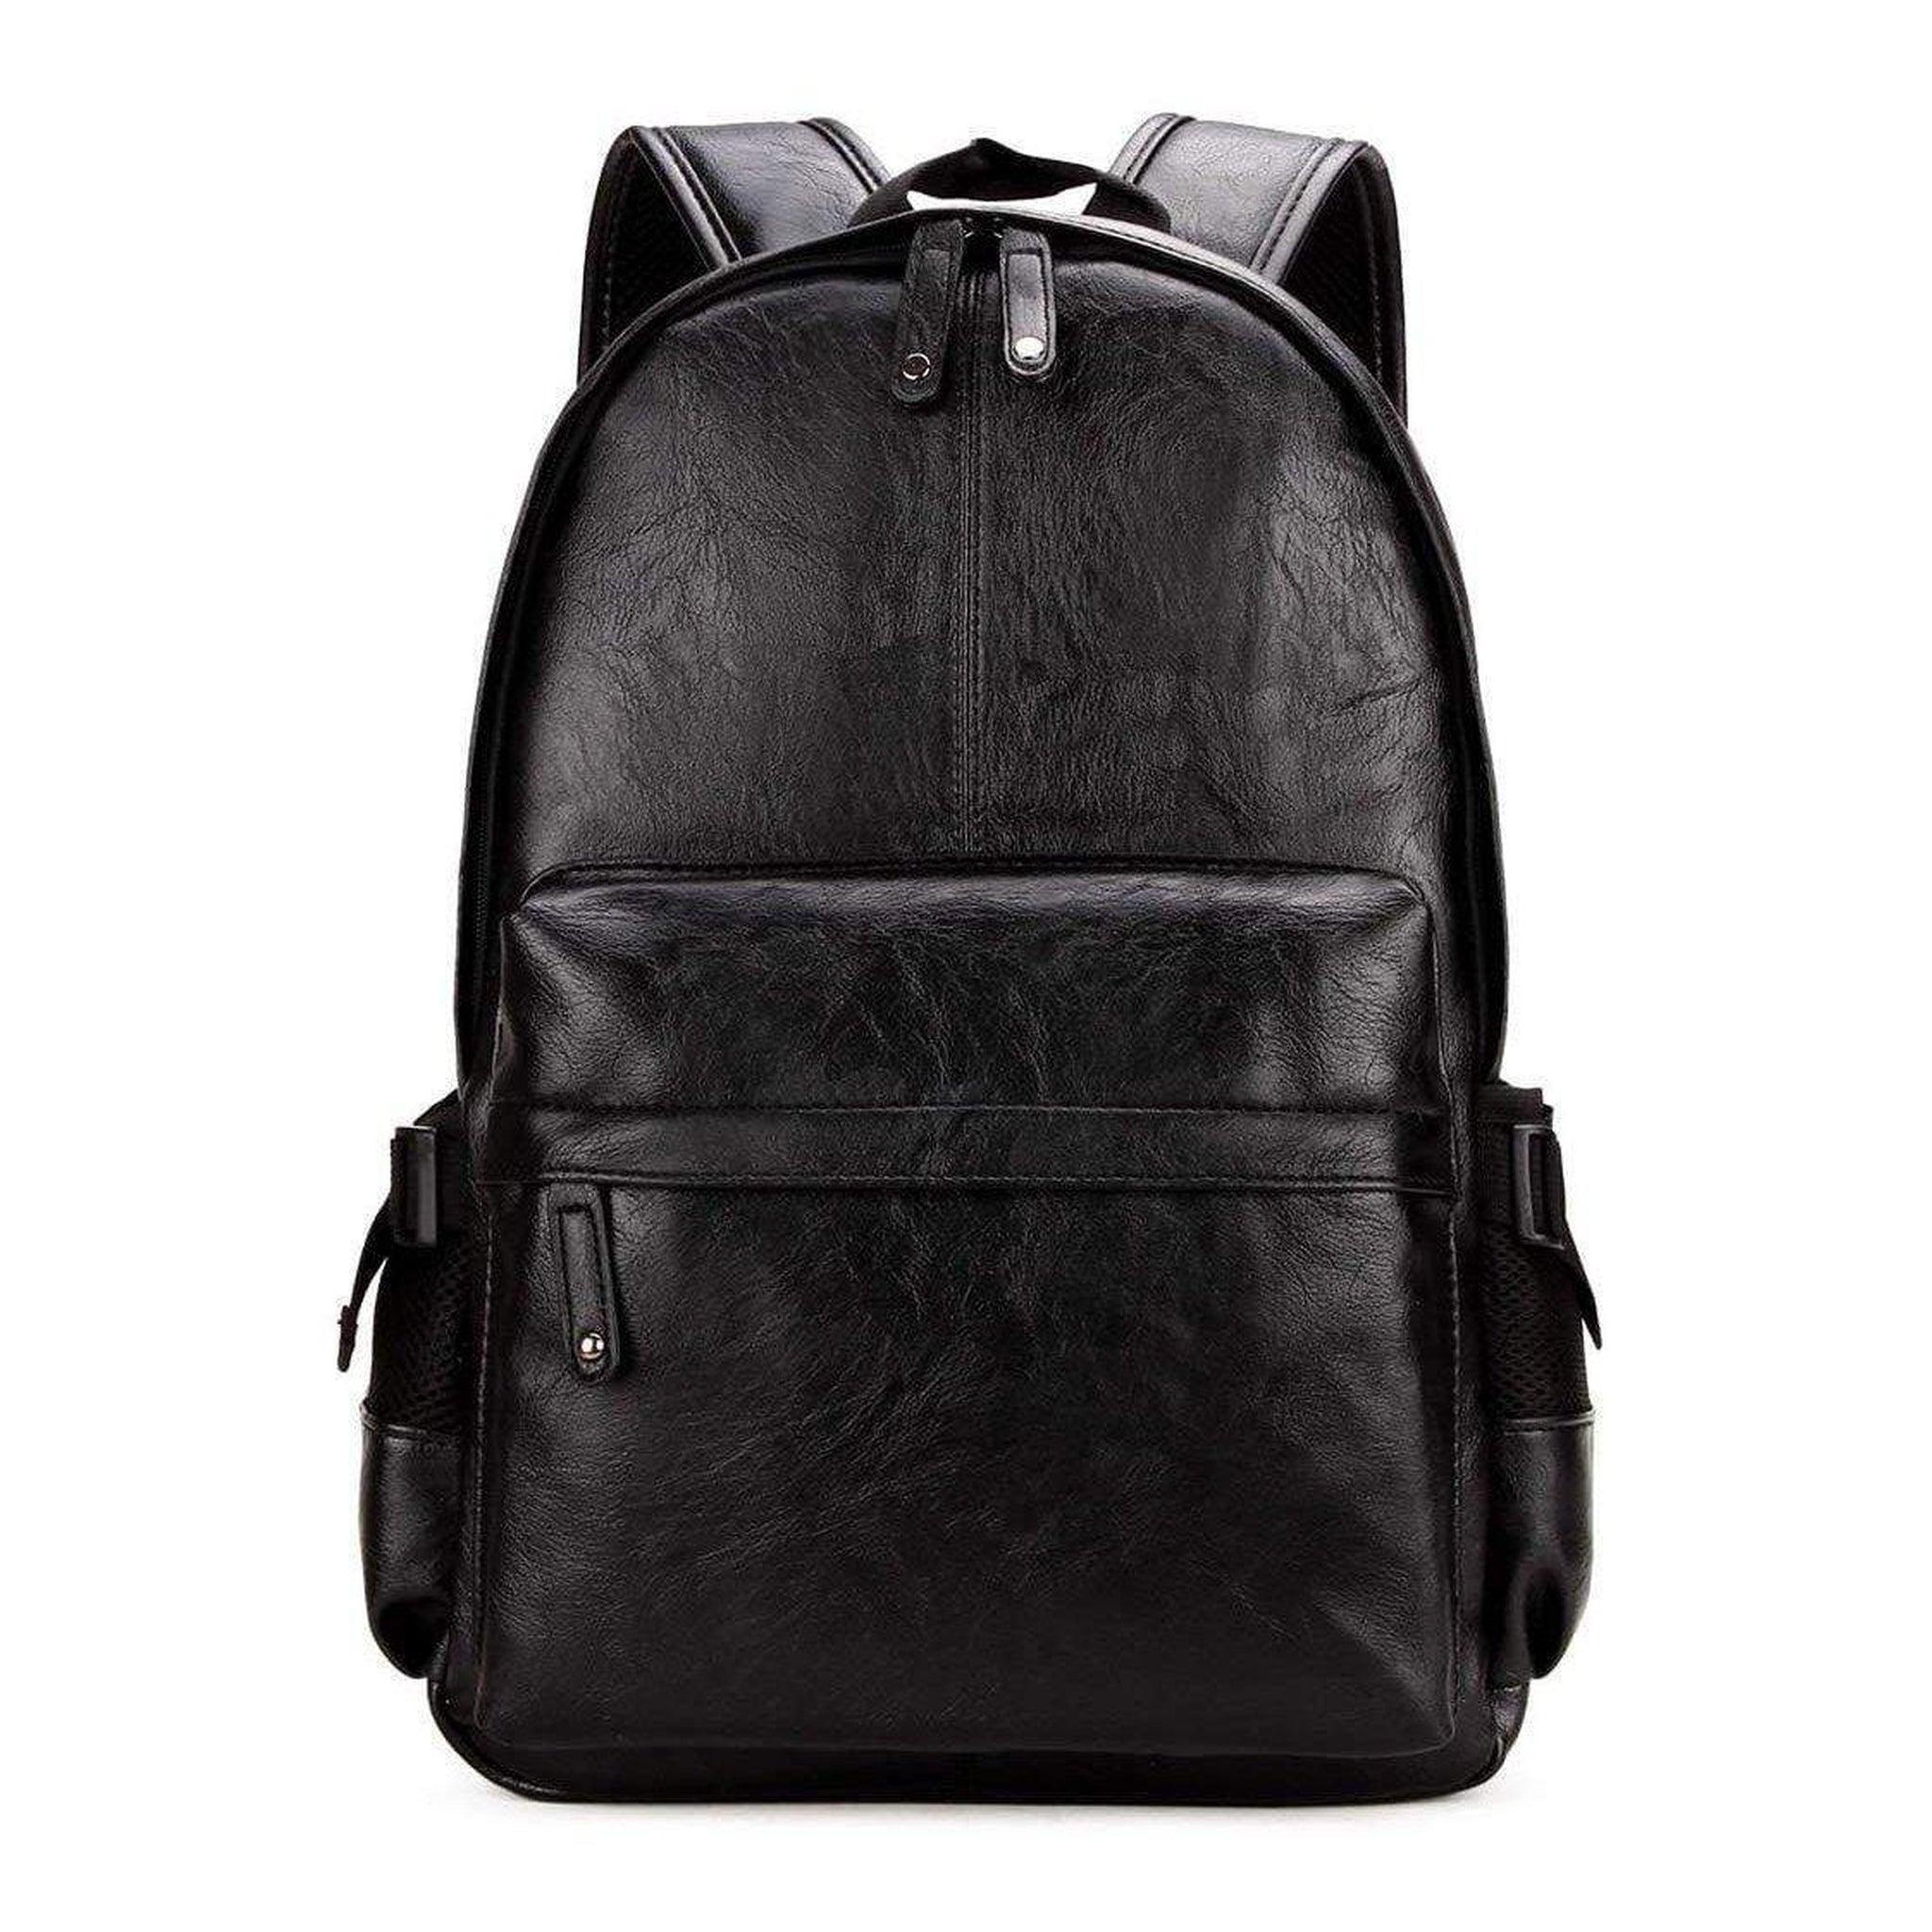 FR Fashion Co. 17 Men's Stylish Scratch-proof Backpack - Black